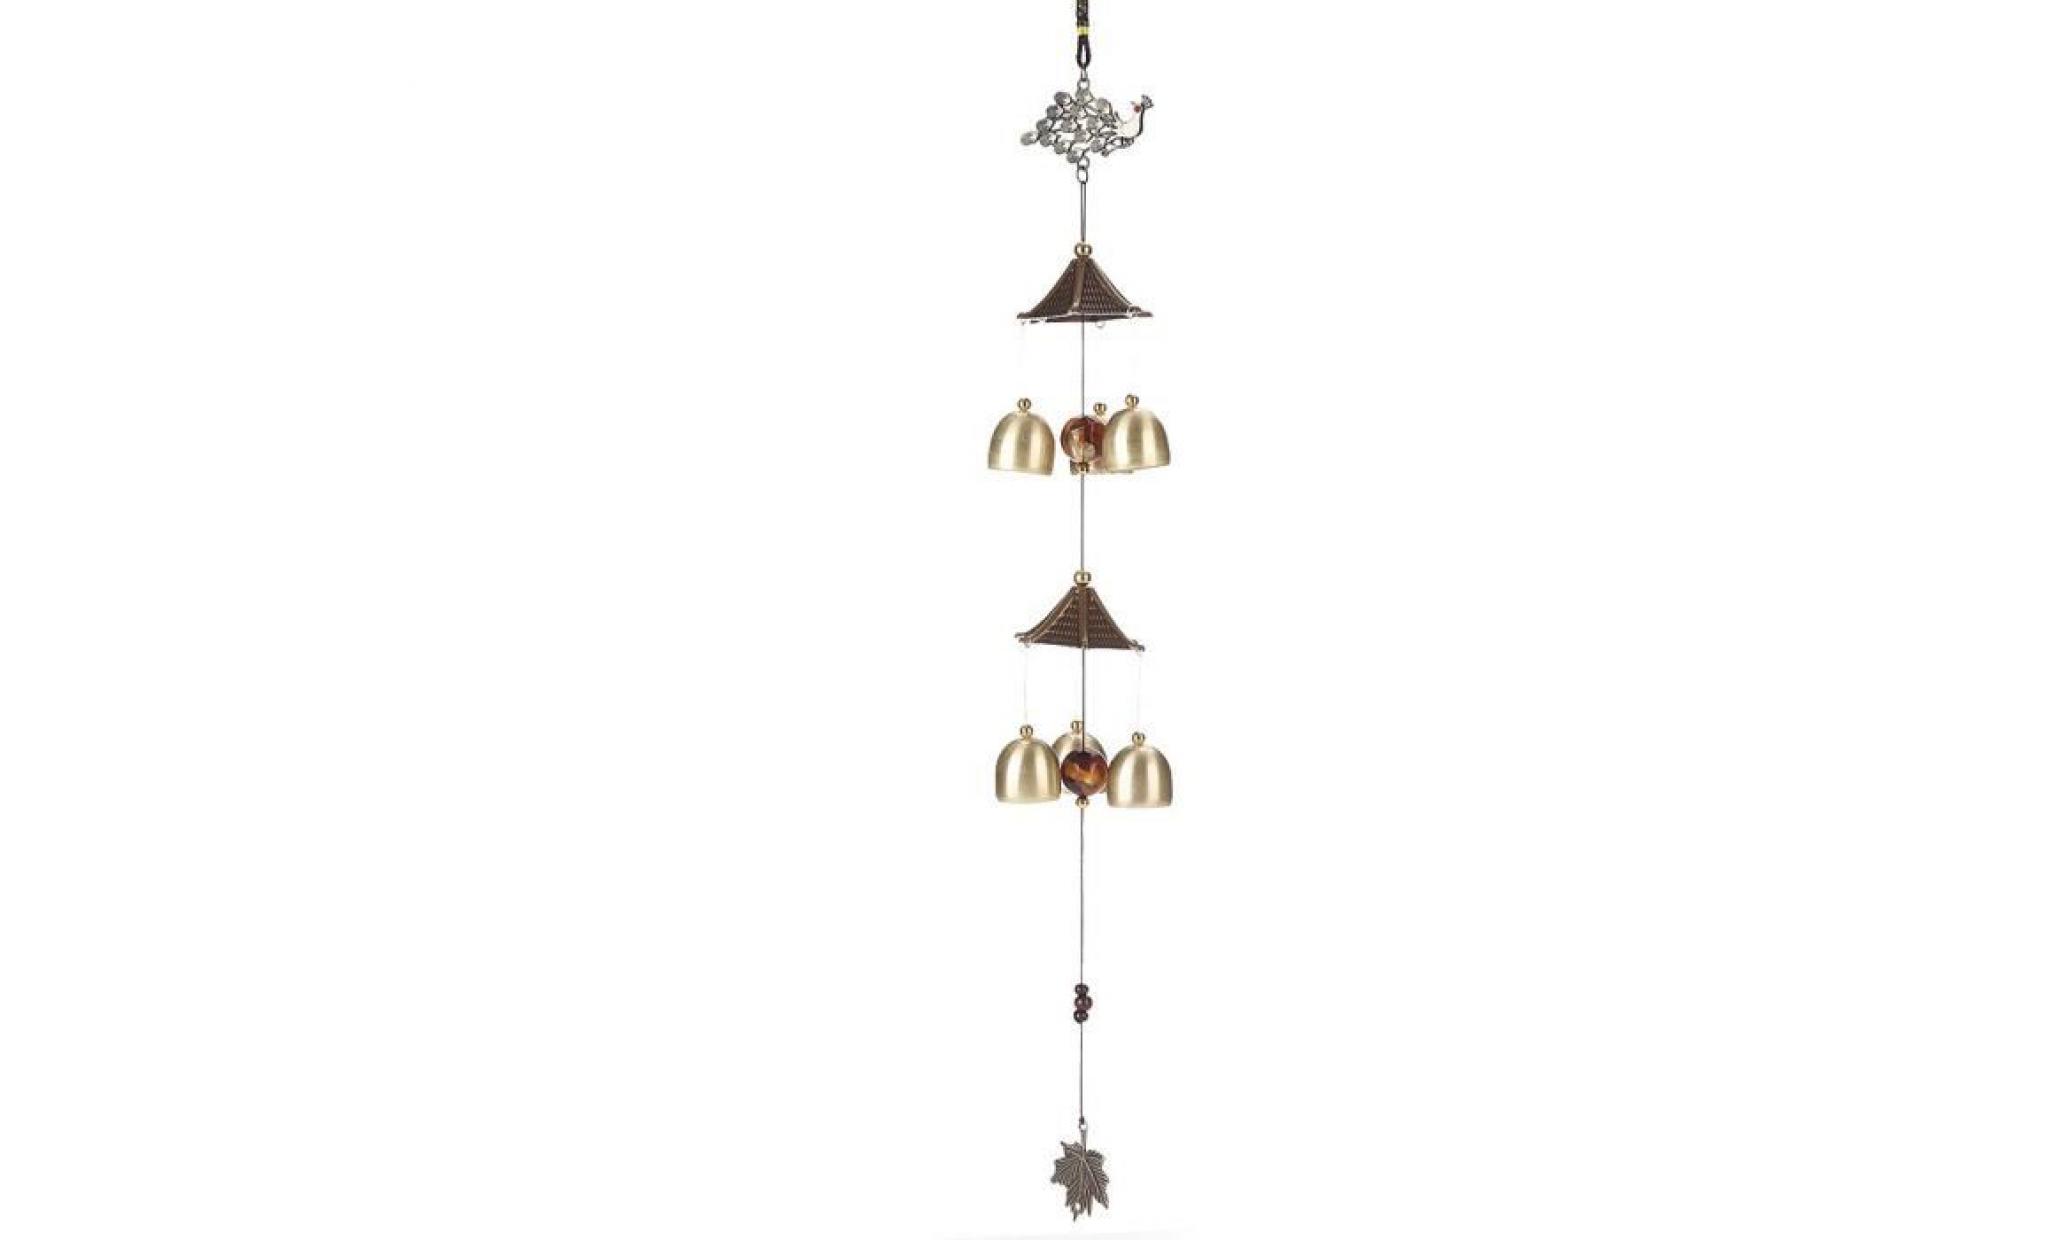 amazing carillon grace collection grand son couleur bronze cloches vent carillons   cff70326401e